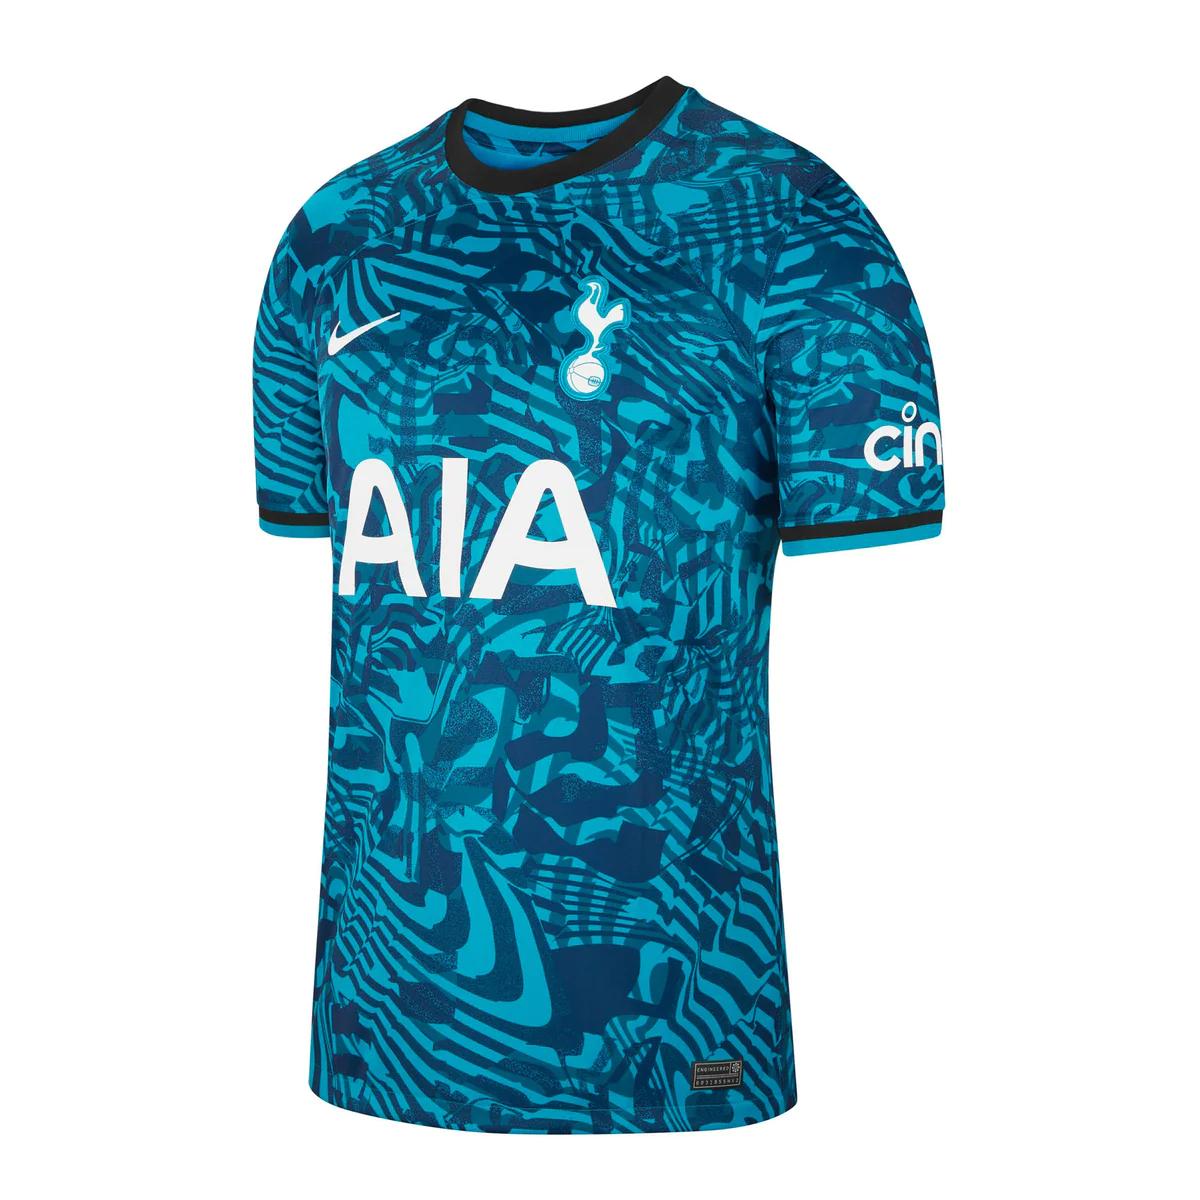 tottenham camisa - Dónde comprar la camiseta original del Tottenham